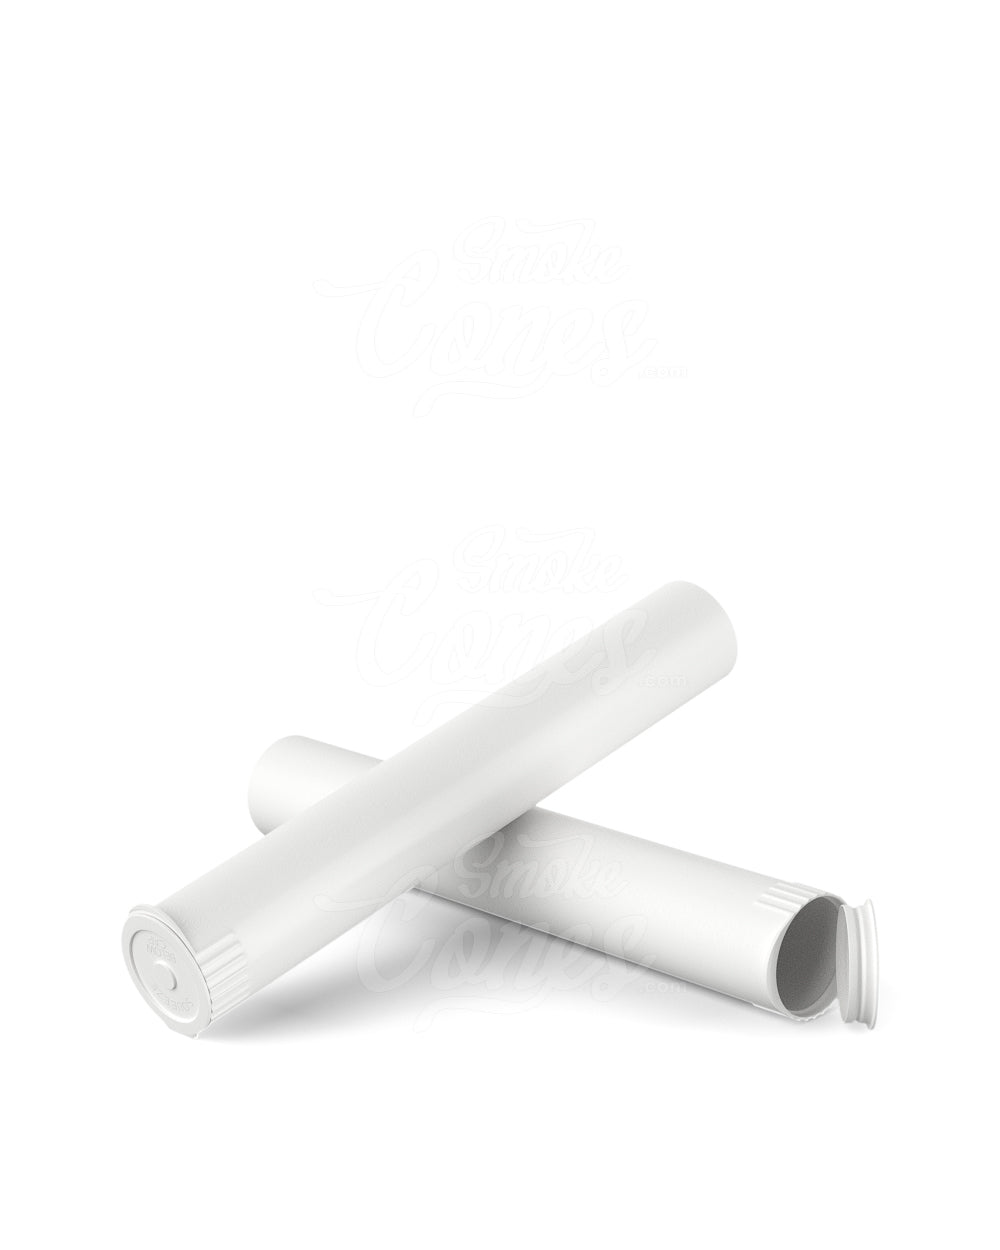 Zetla Plastic Joint Tubes Transparent (48 Pcs)